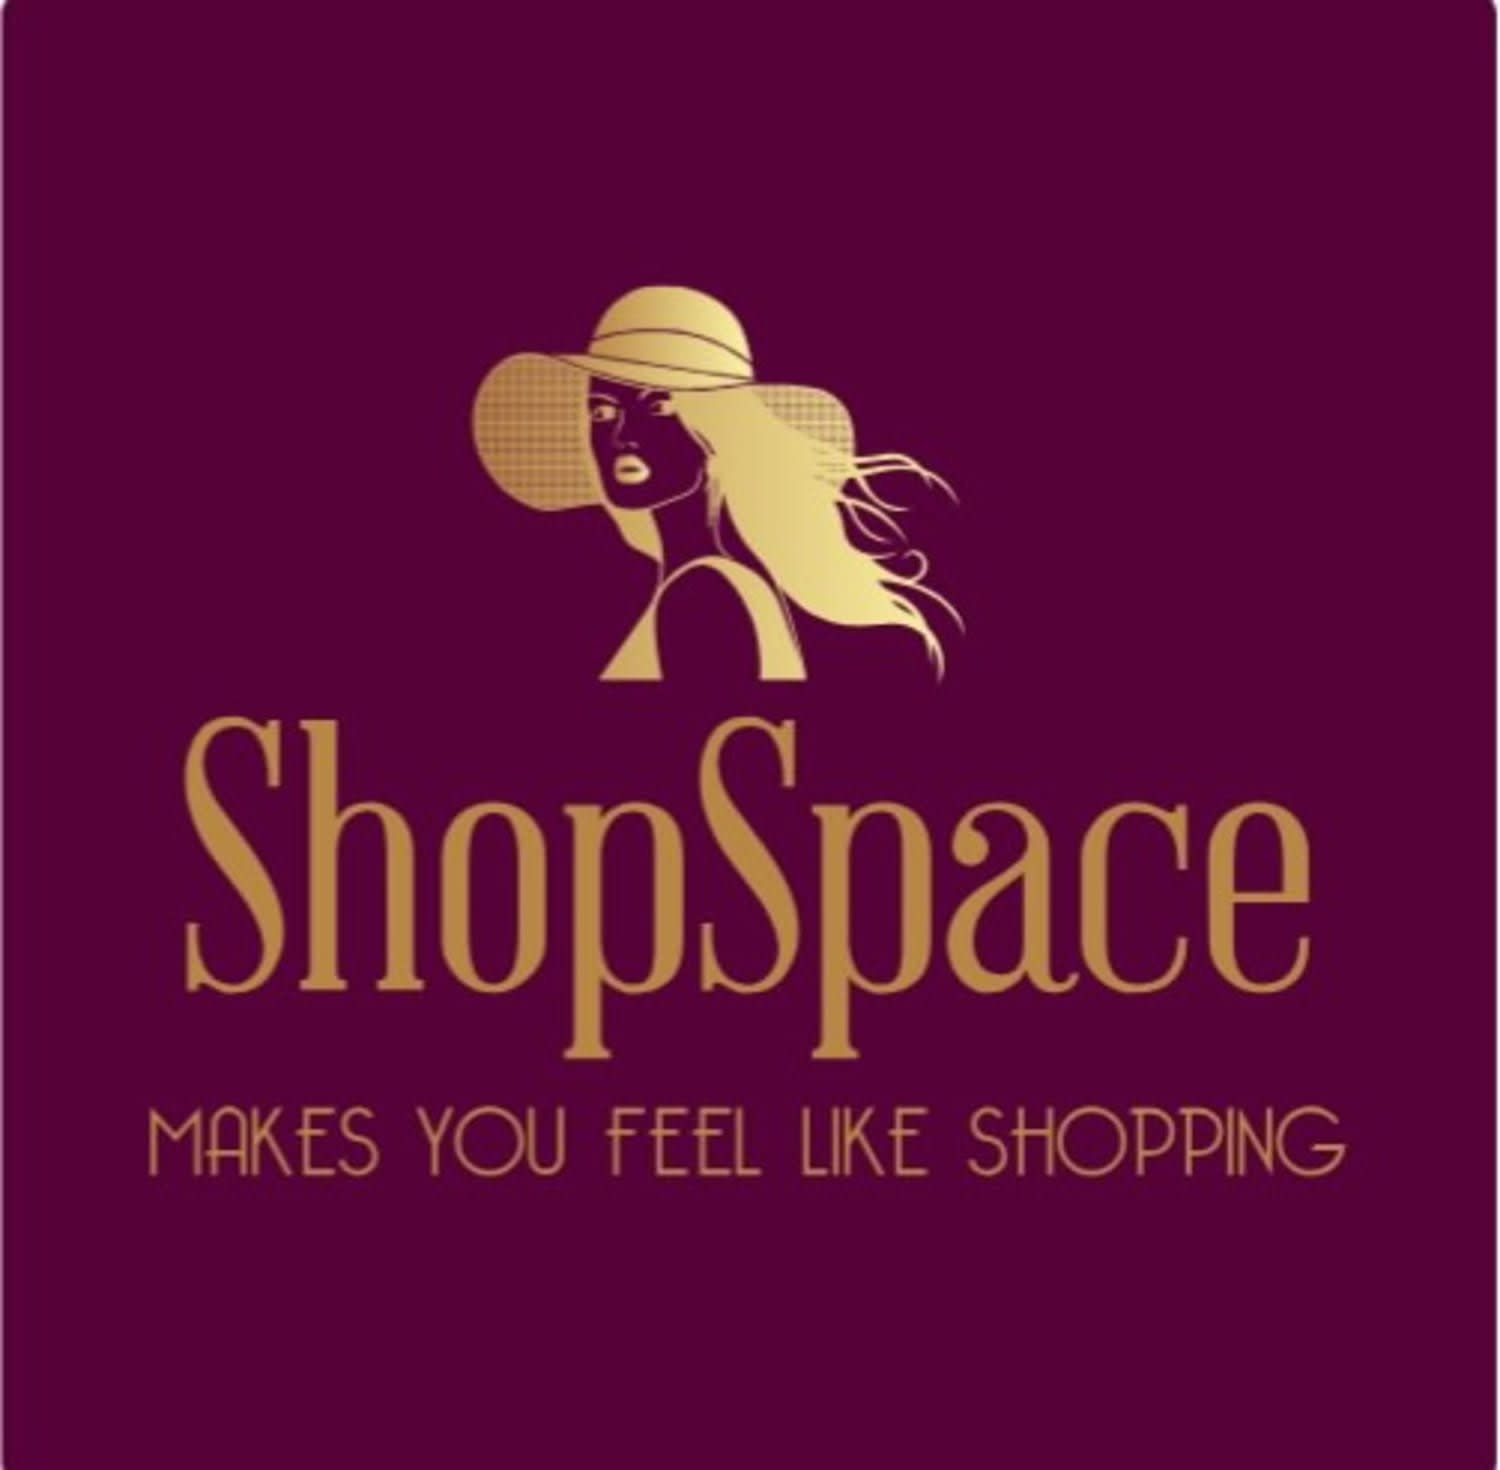 Shopspace